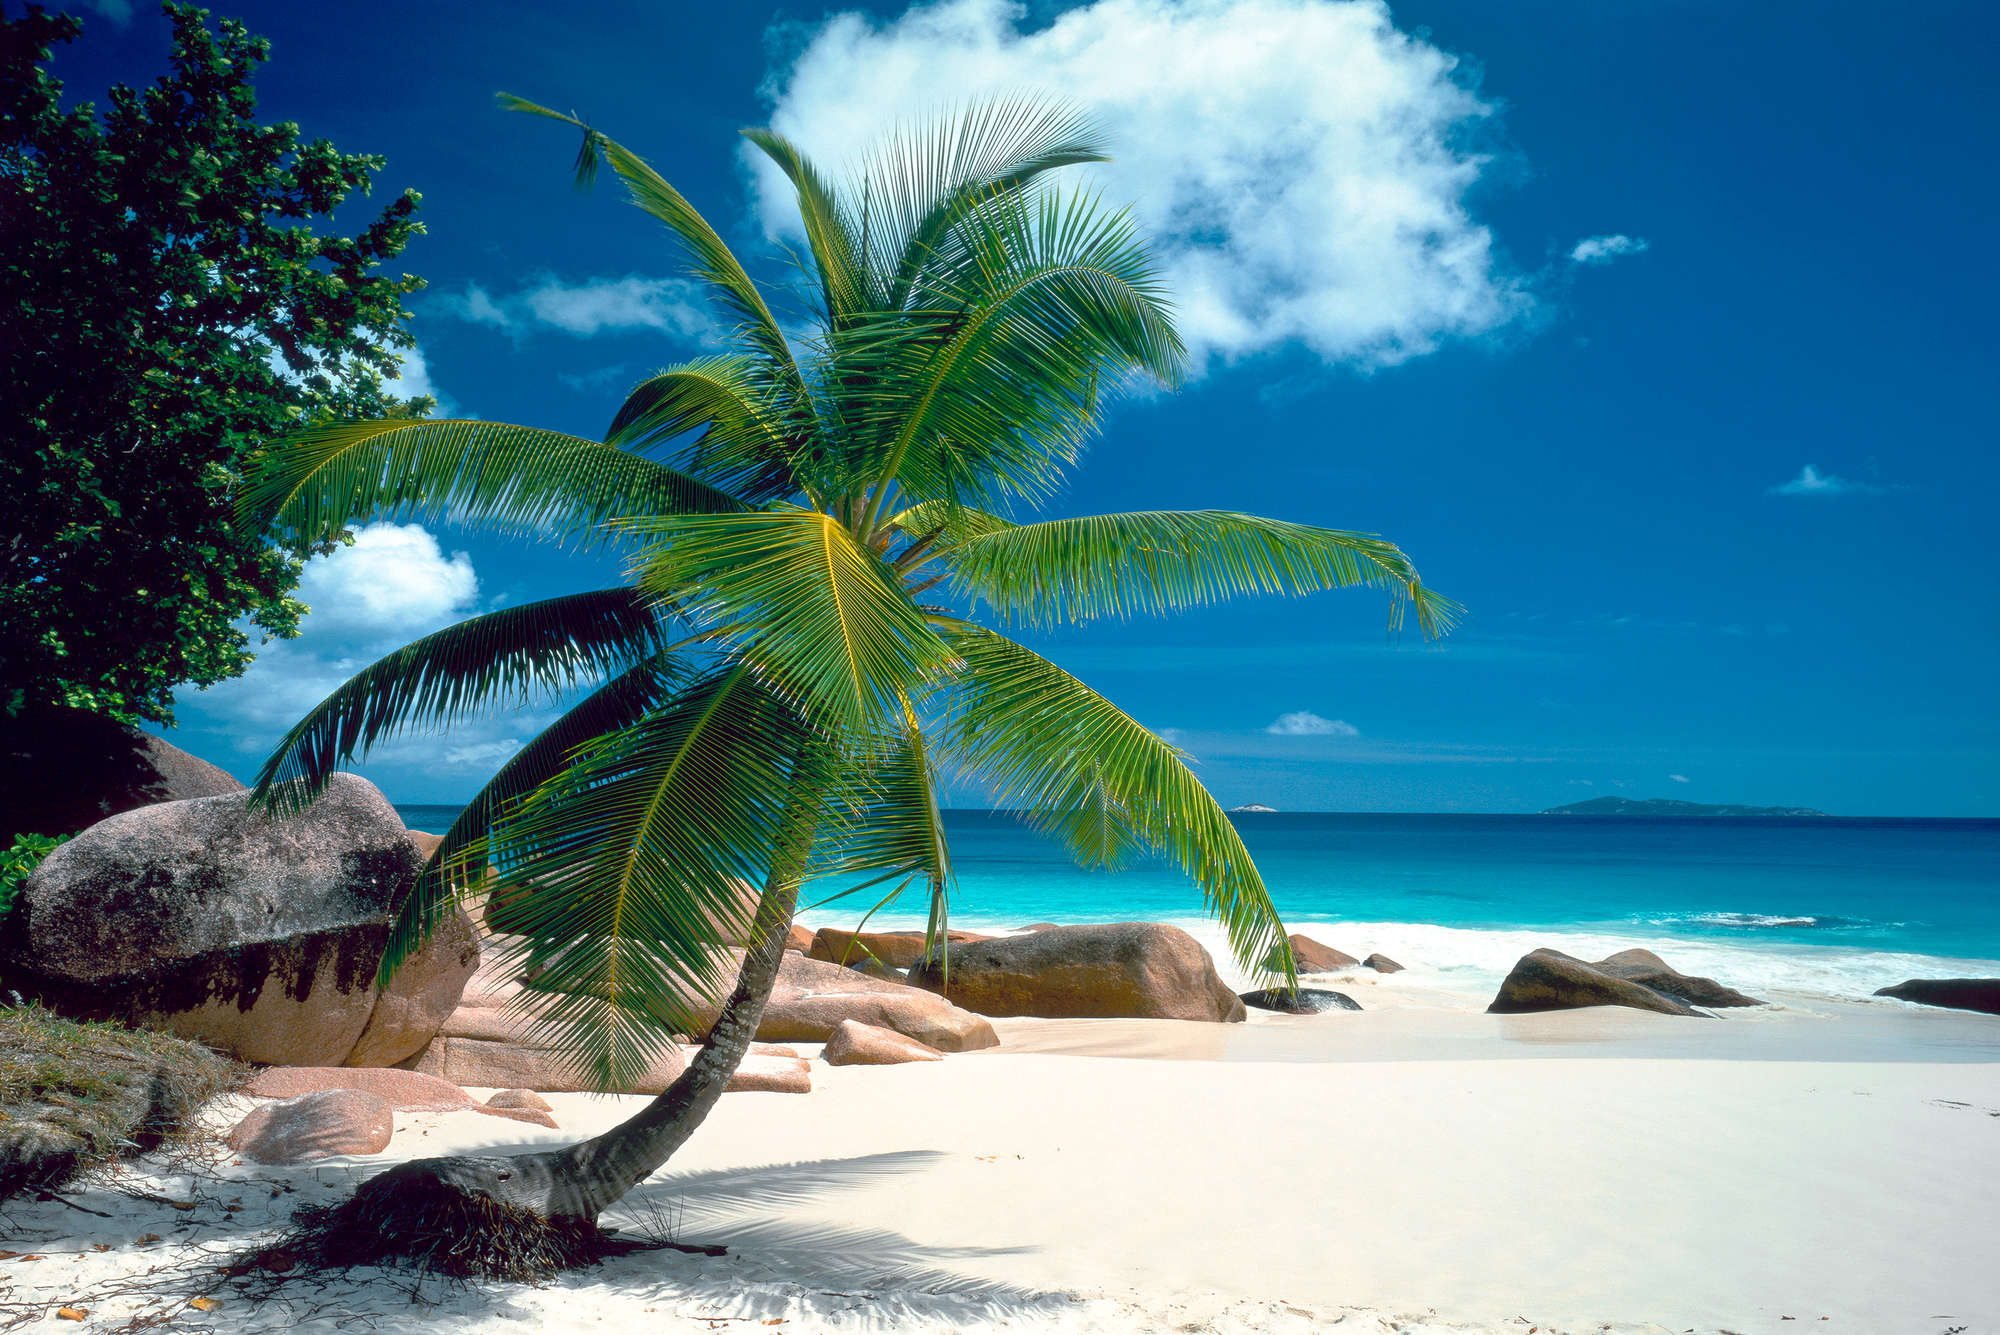             Strand Behang Palmboom met Blauwe Zee op Matte Gladde Vlieseline
        